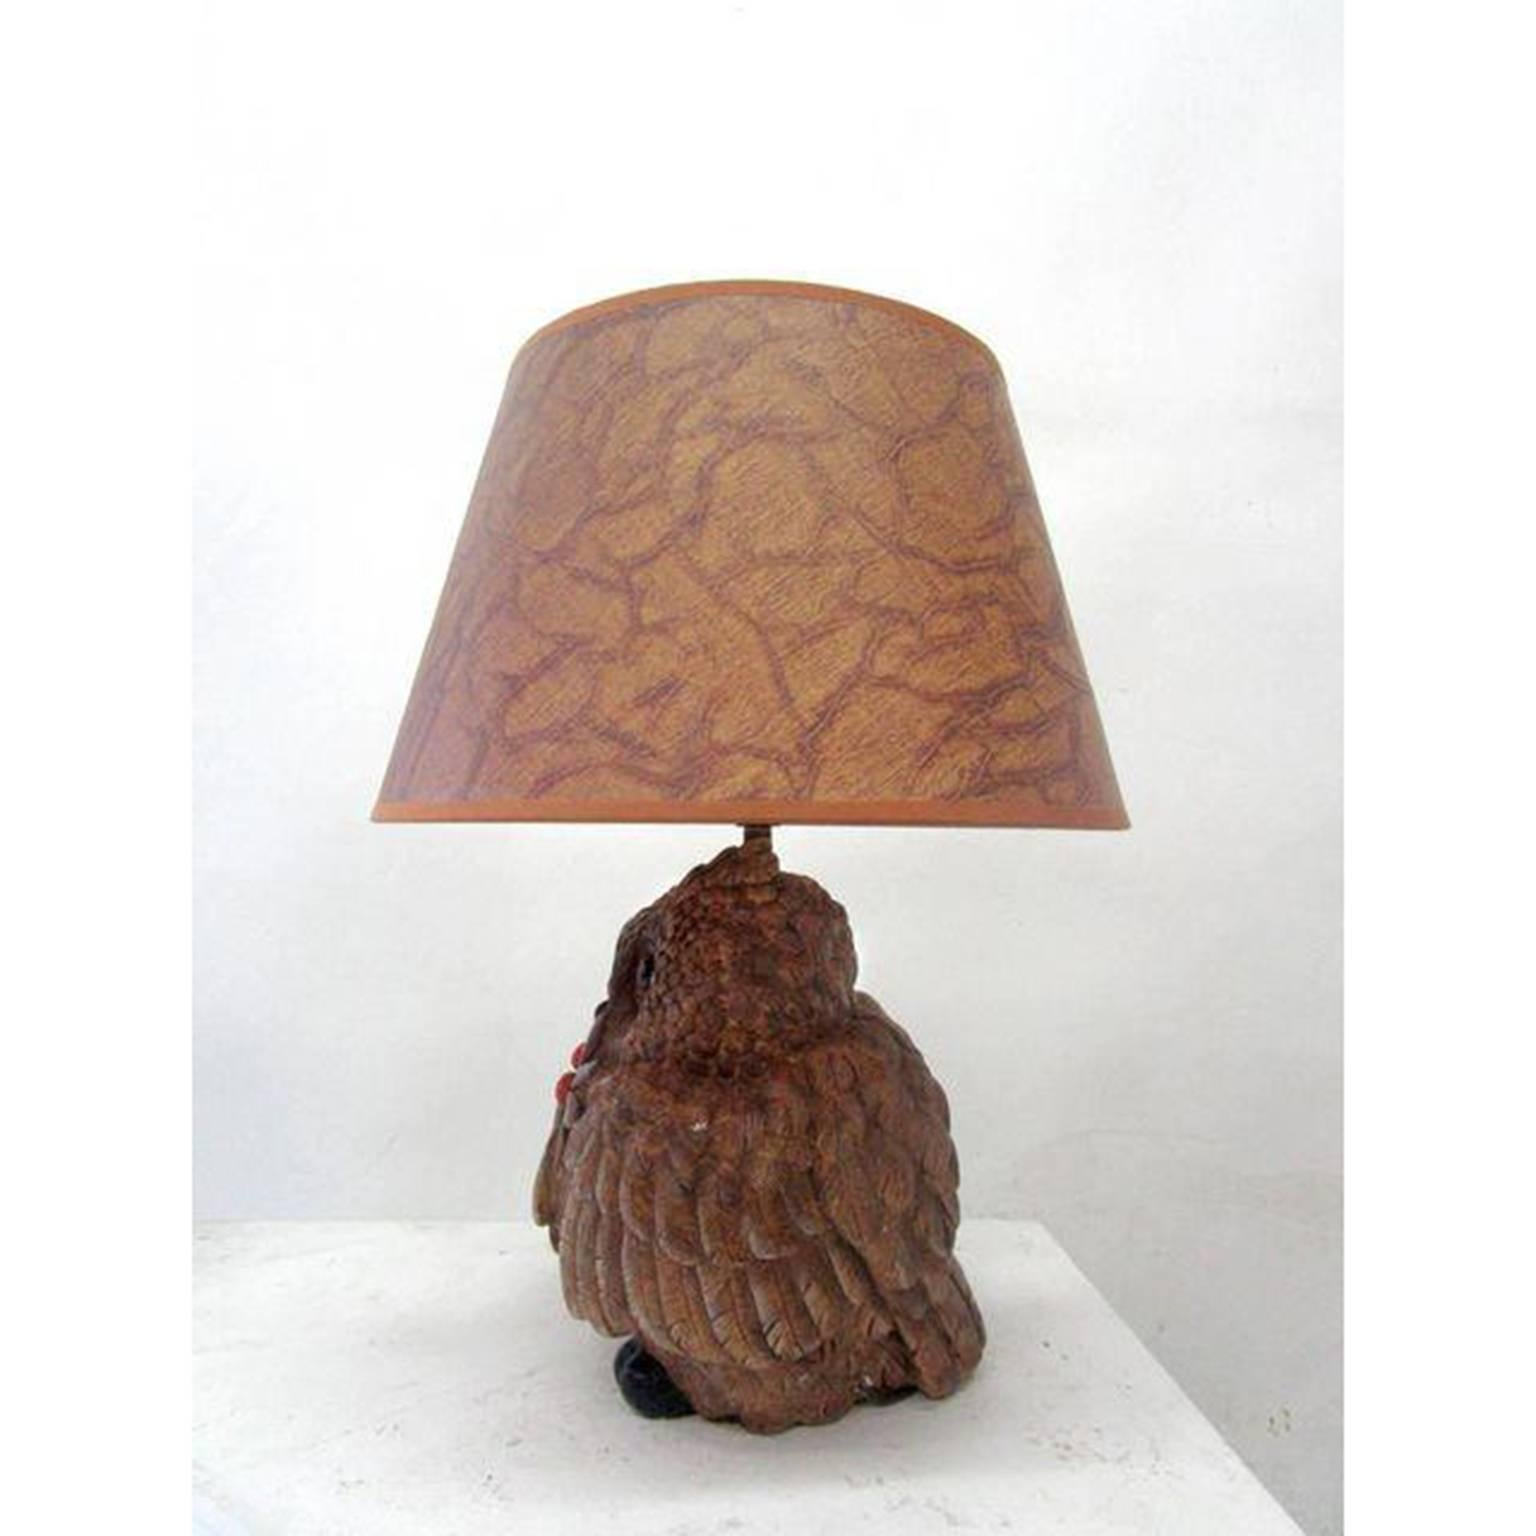 wooden owl lamp